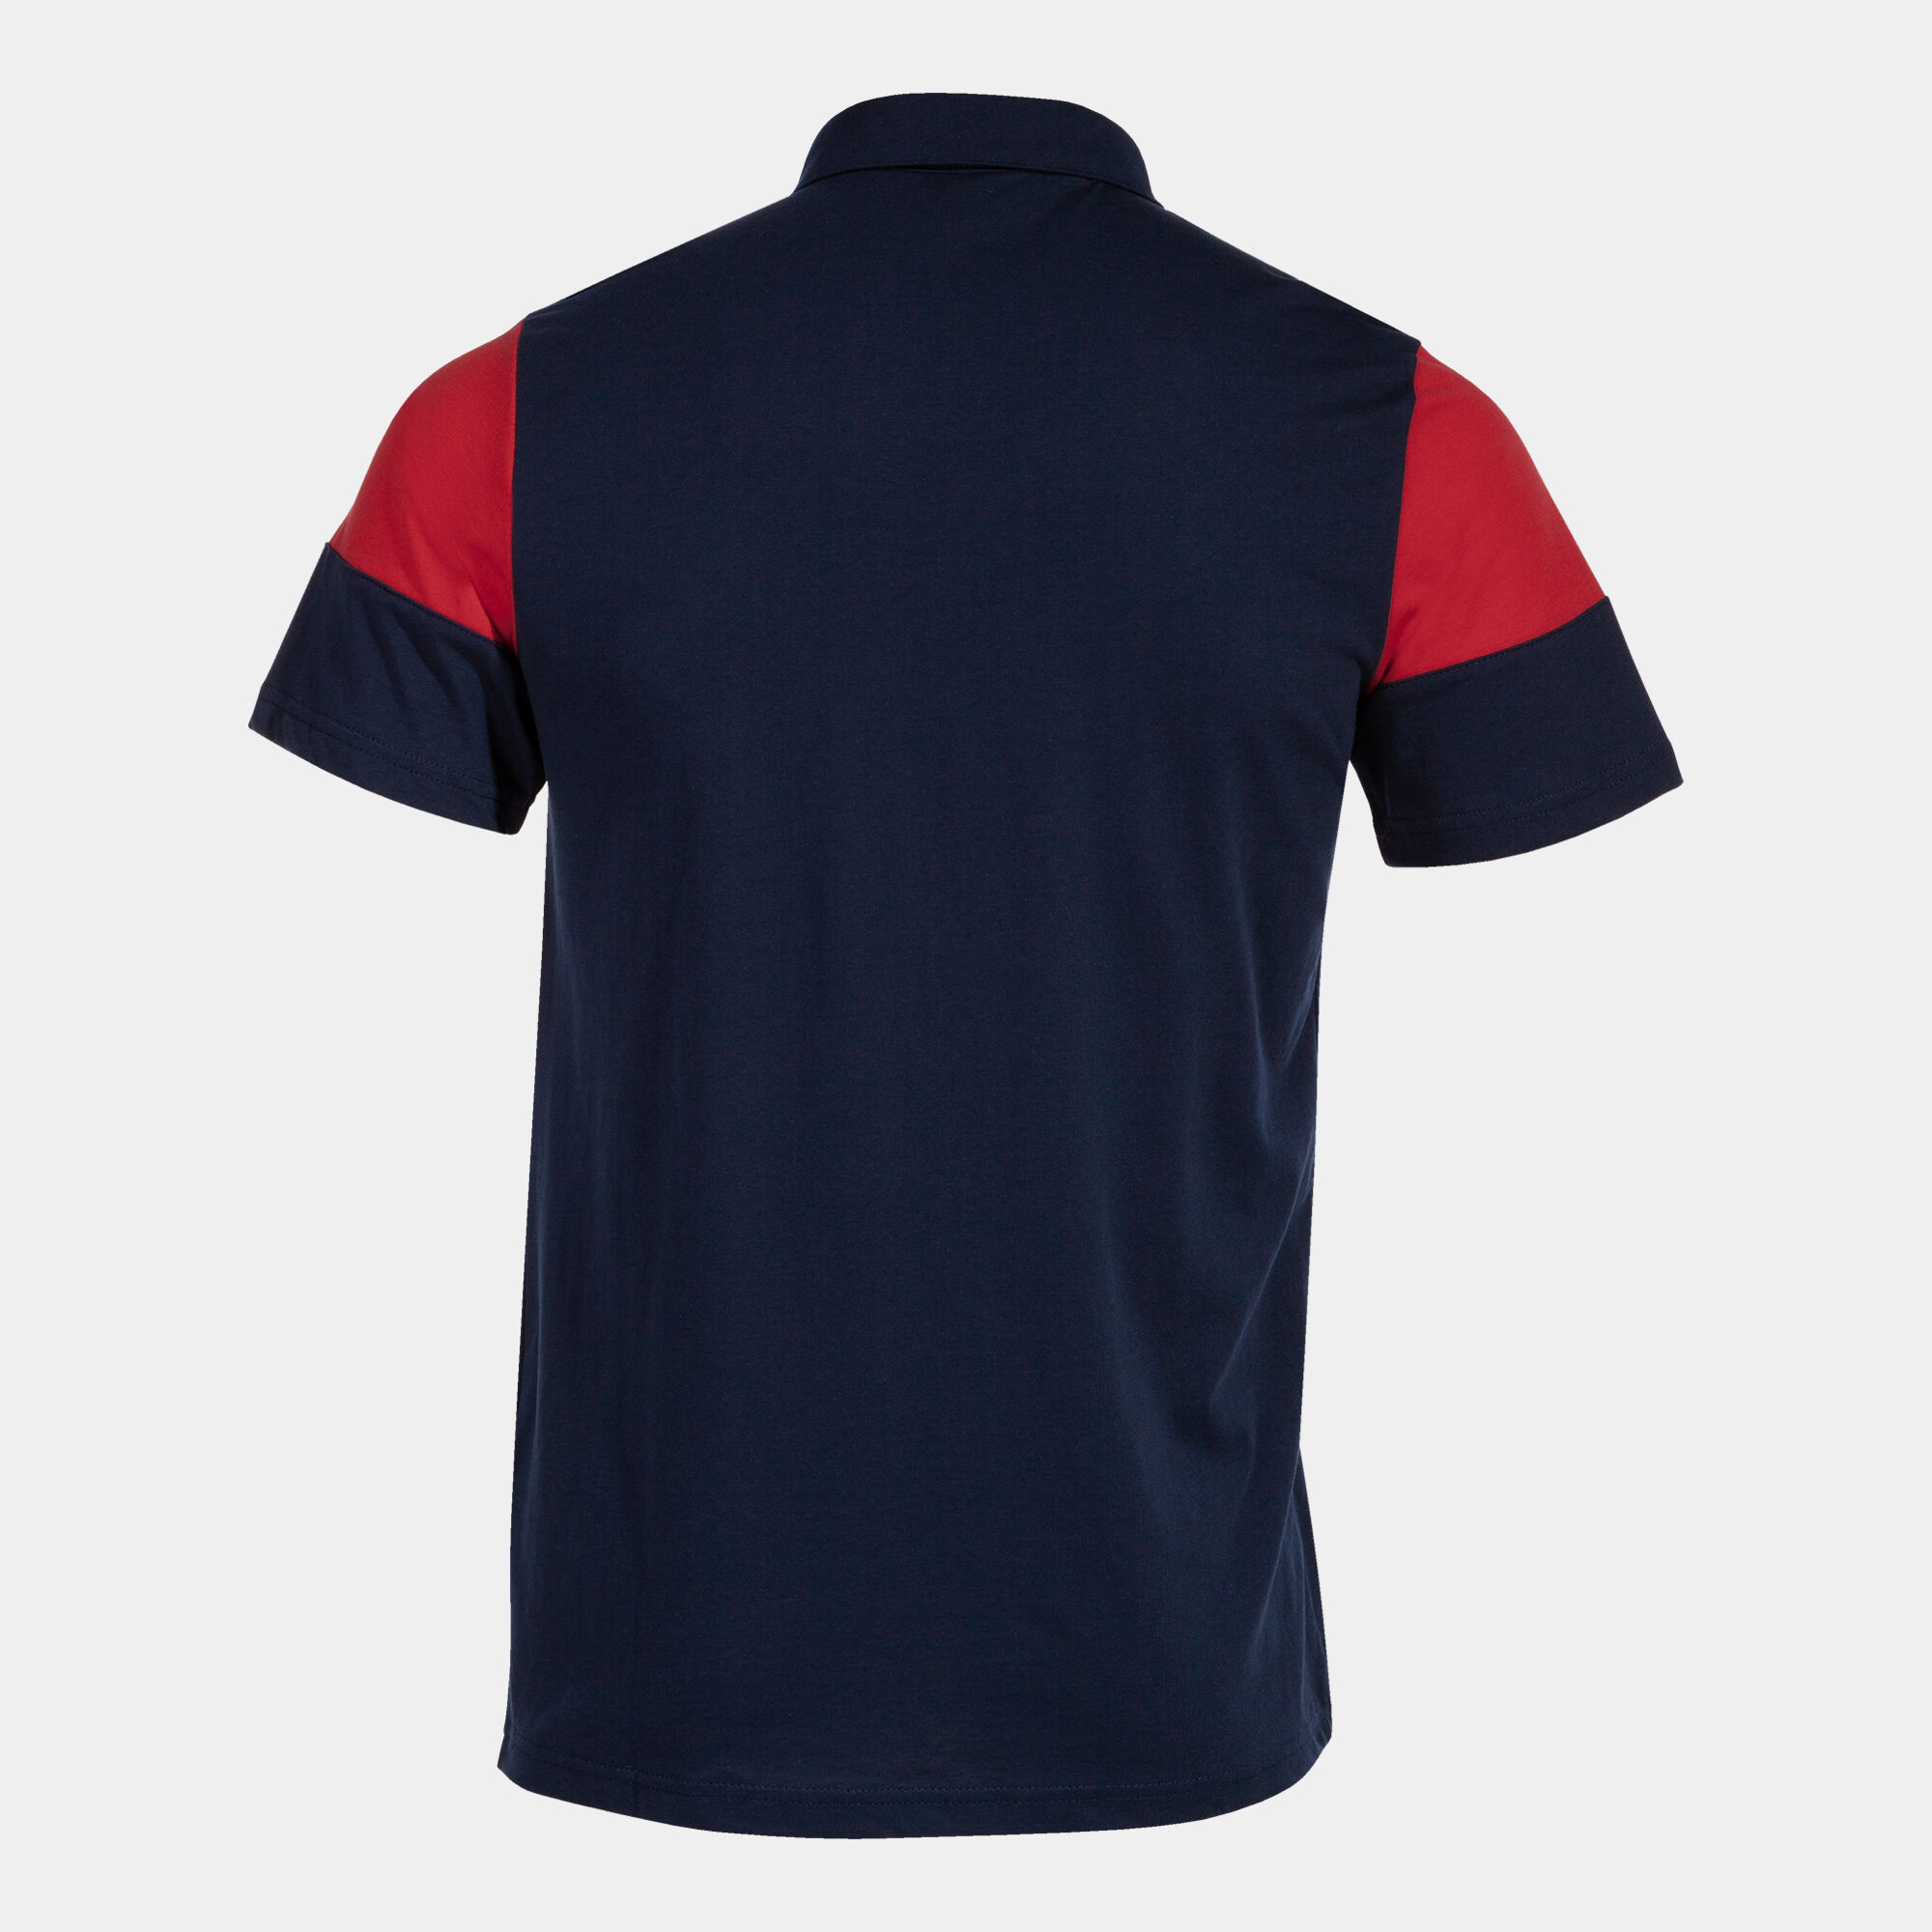 Polo shirt short-sleeve man Crew V navy blue red